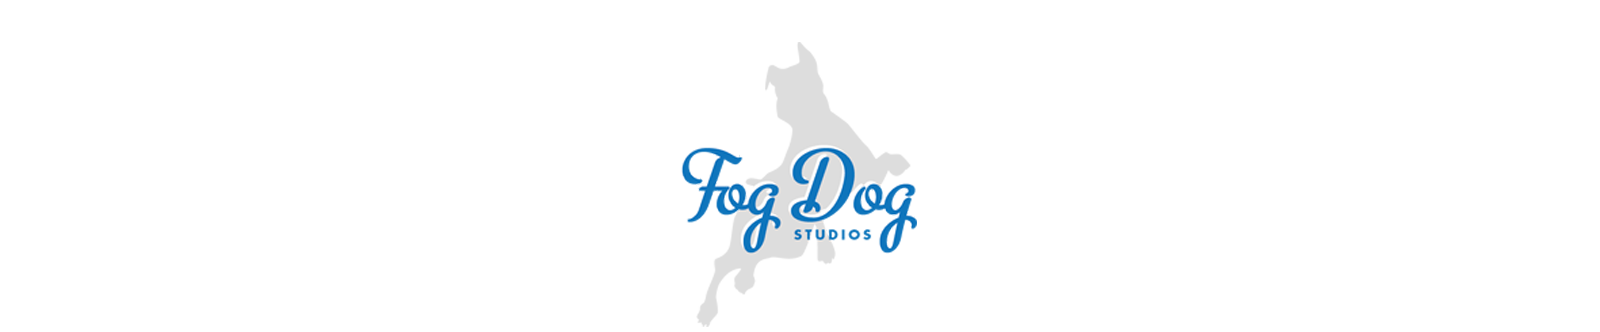 Fog Dog Studios Logo